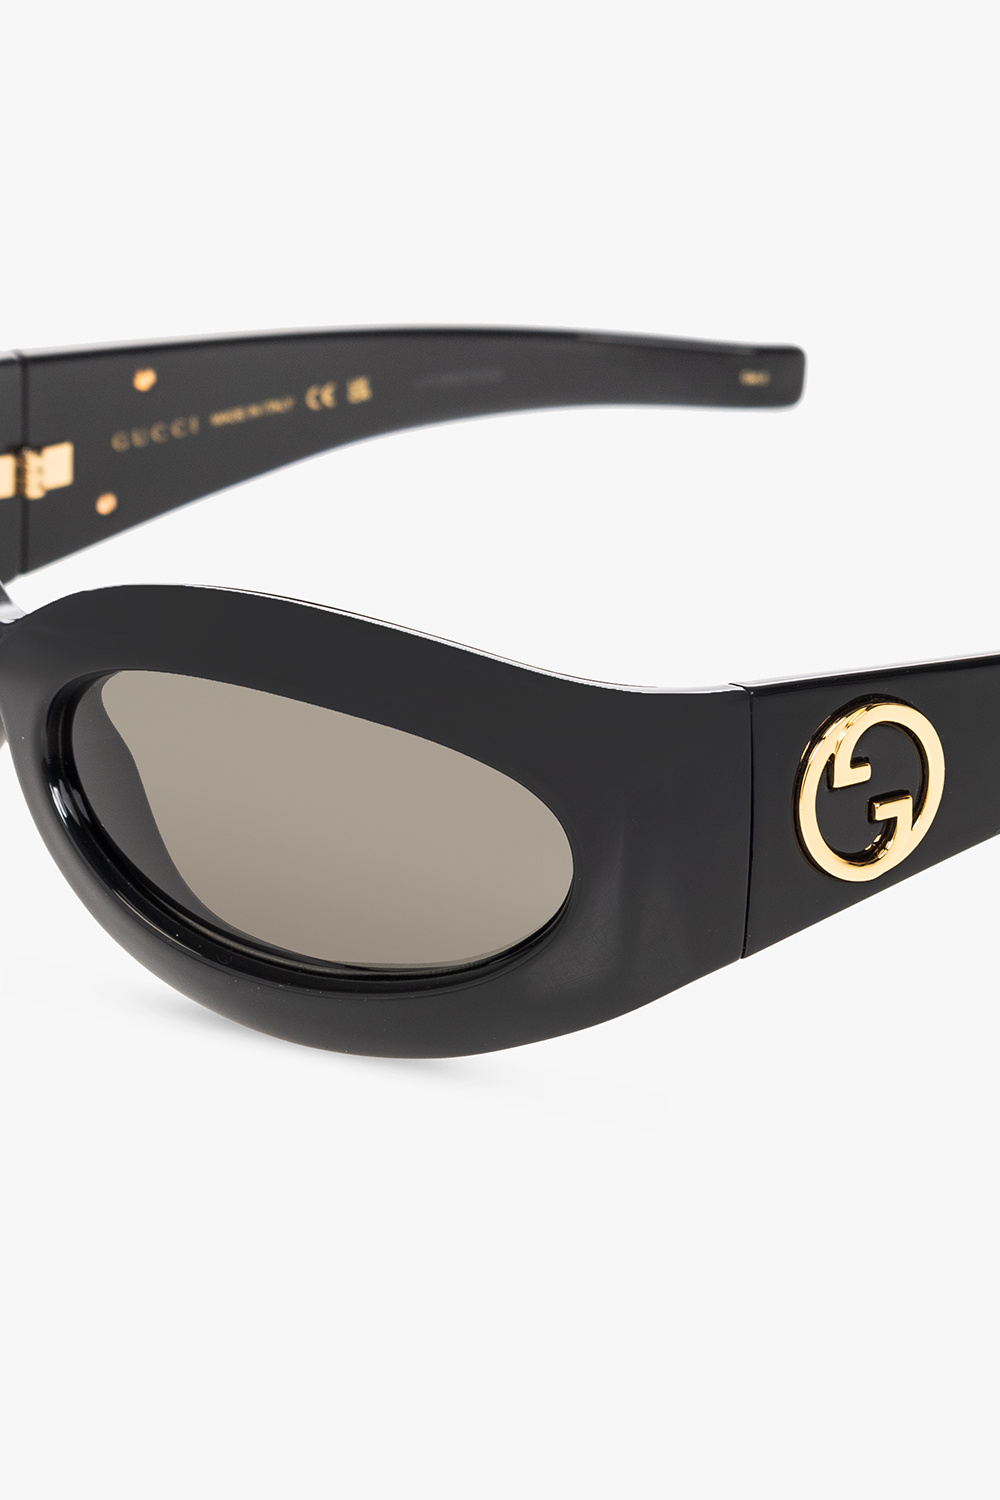 Gucci Ace & Tate Allen Sunglasses